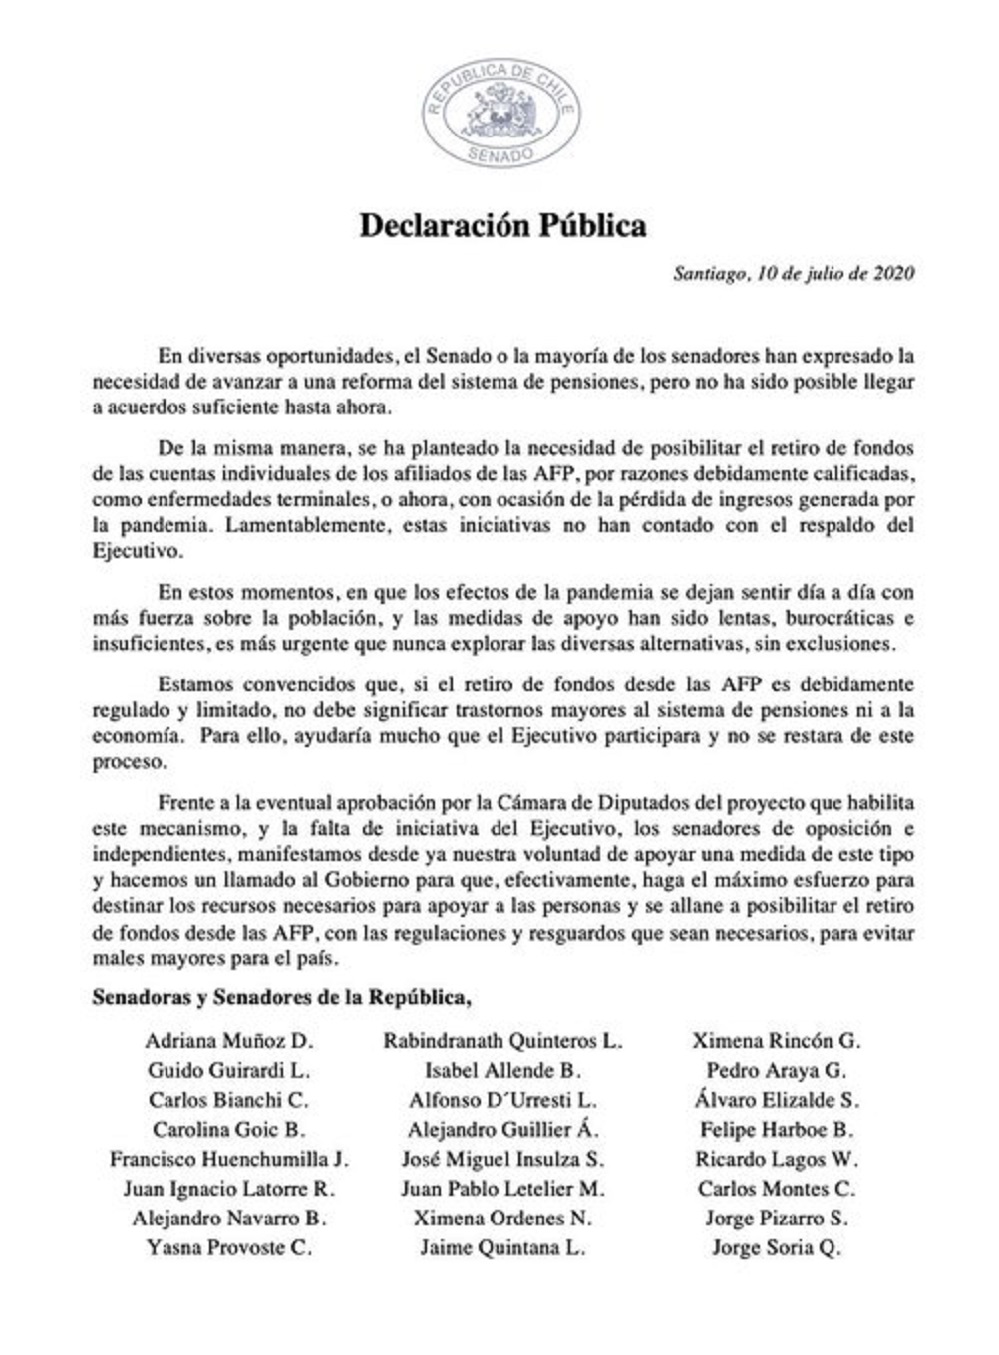 24 senadores de oposición anuncian voto favorable a proyecto retiro 10% fondos de AFP: senadores por Magallanes Bianchi y Goic firman declaración